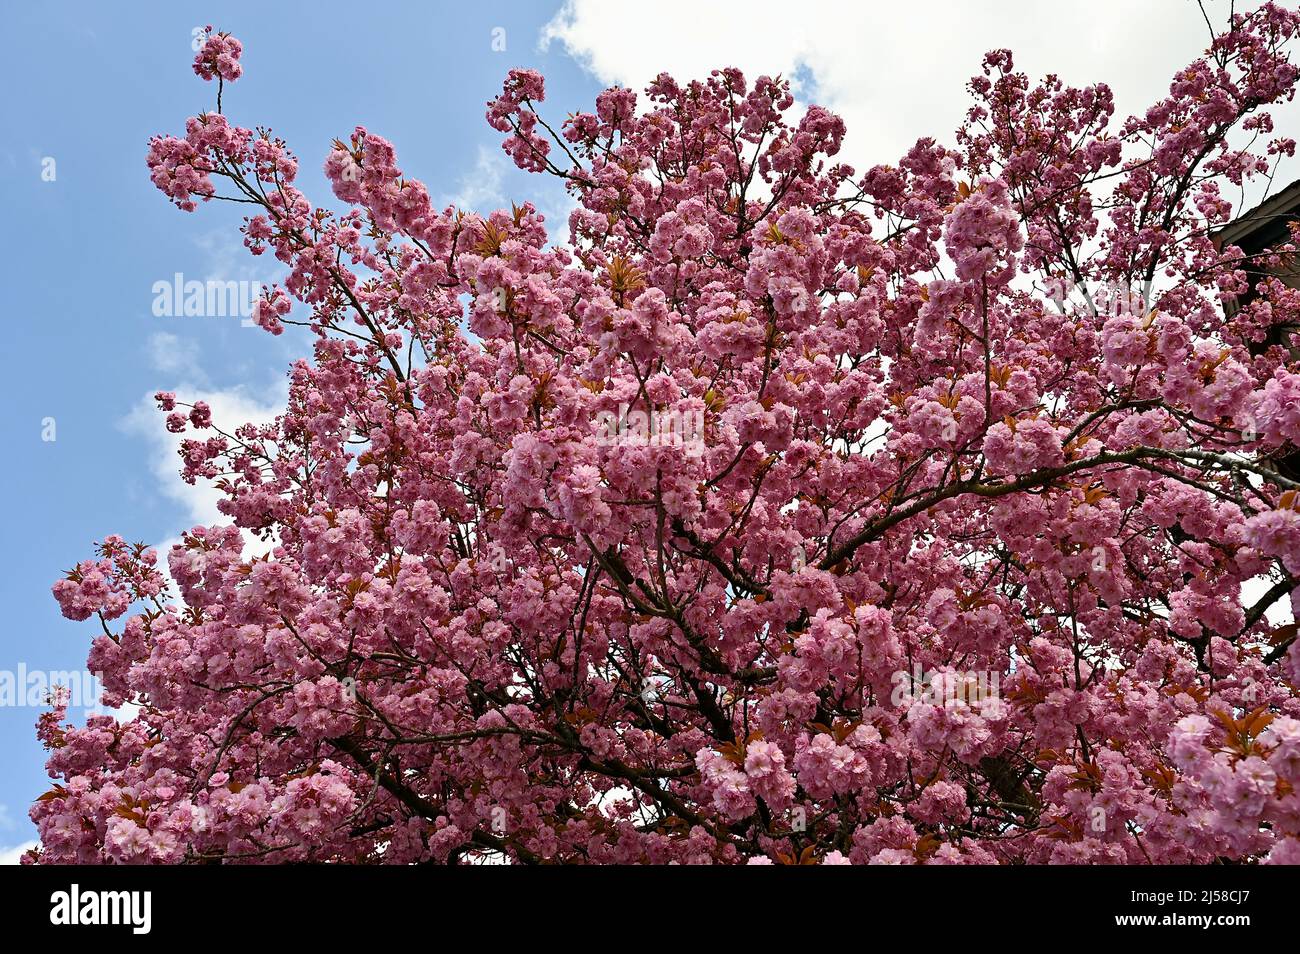 Riesiger Mandelbaum - Prunus dulcis - in voller Blüte im April Foto Stock